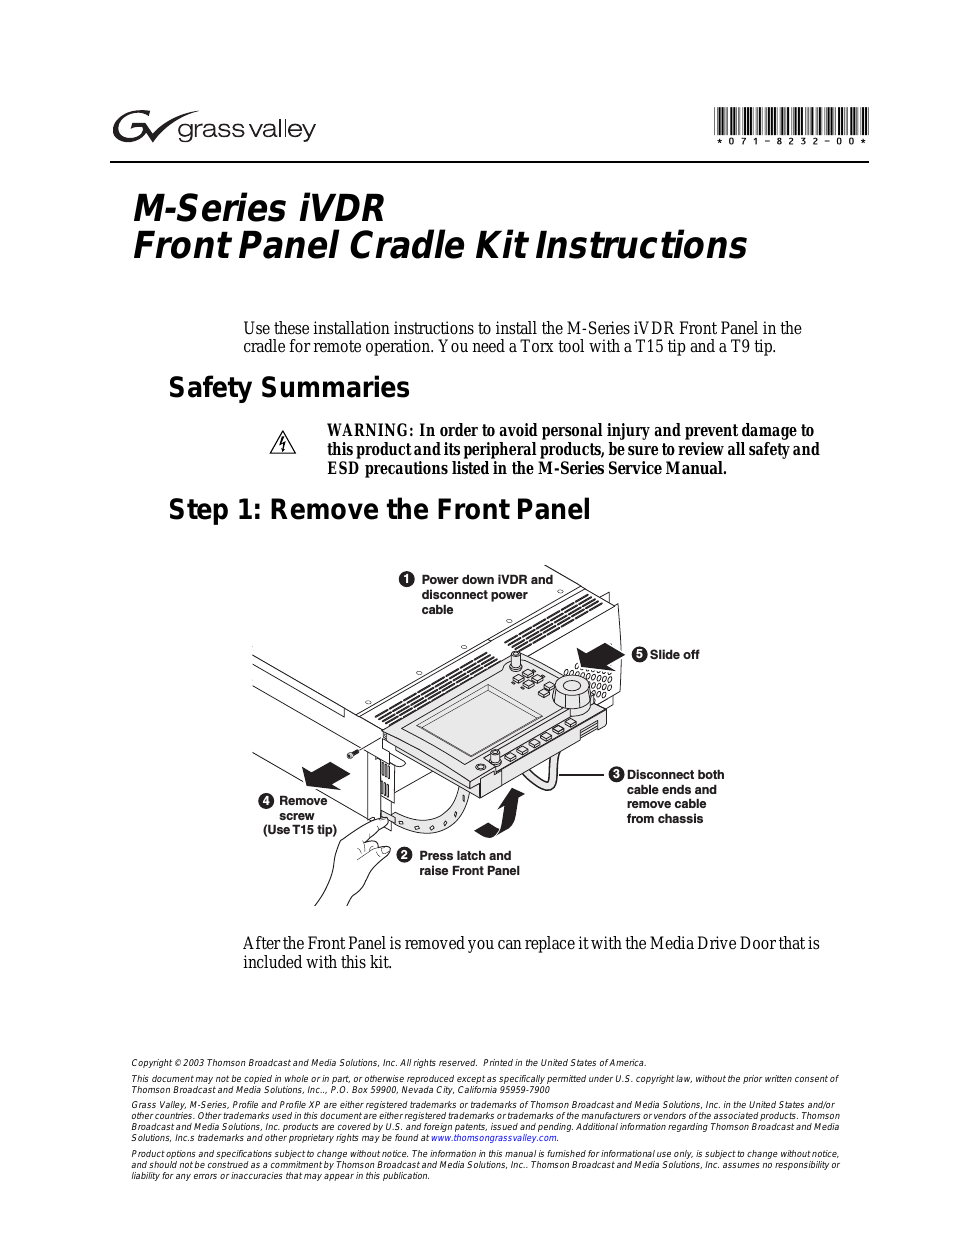 M-Series iVDR Front Panel Cradle Kit Instructions